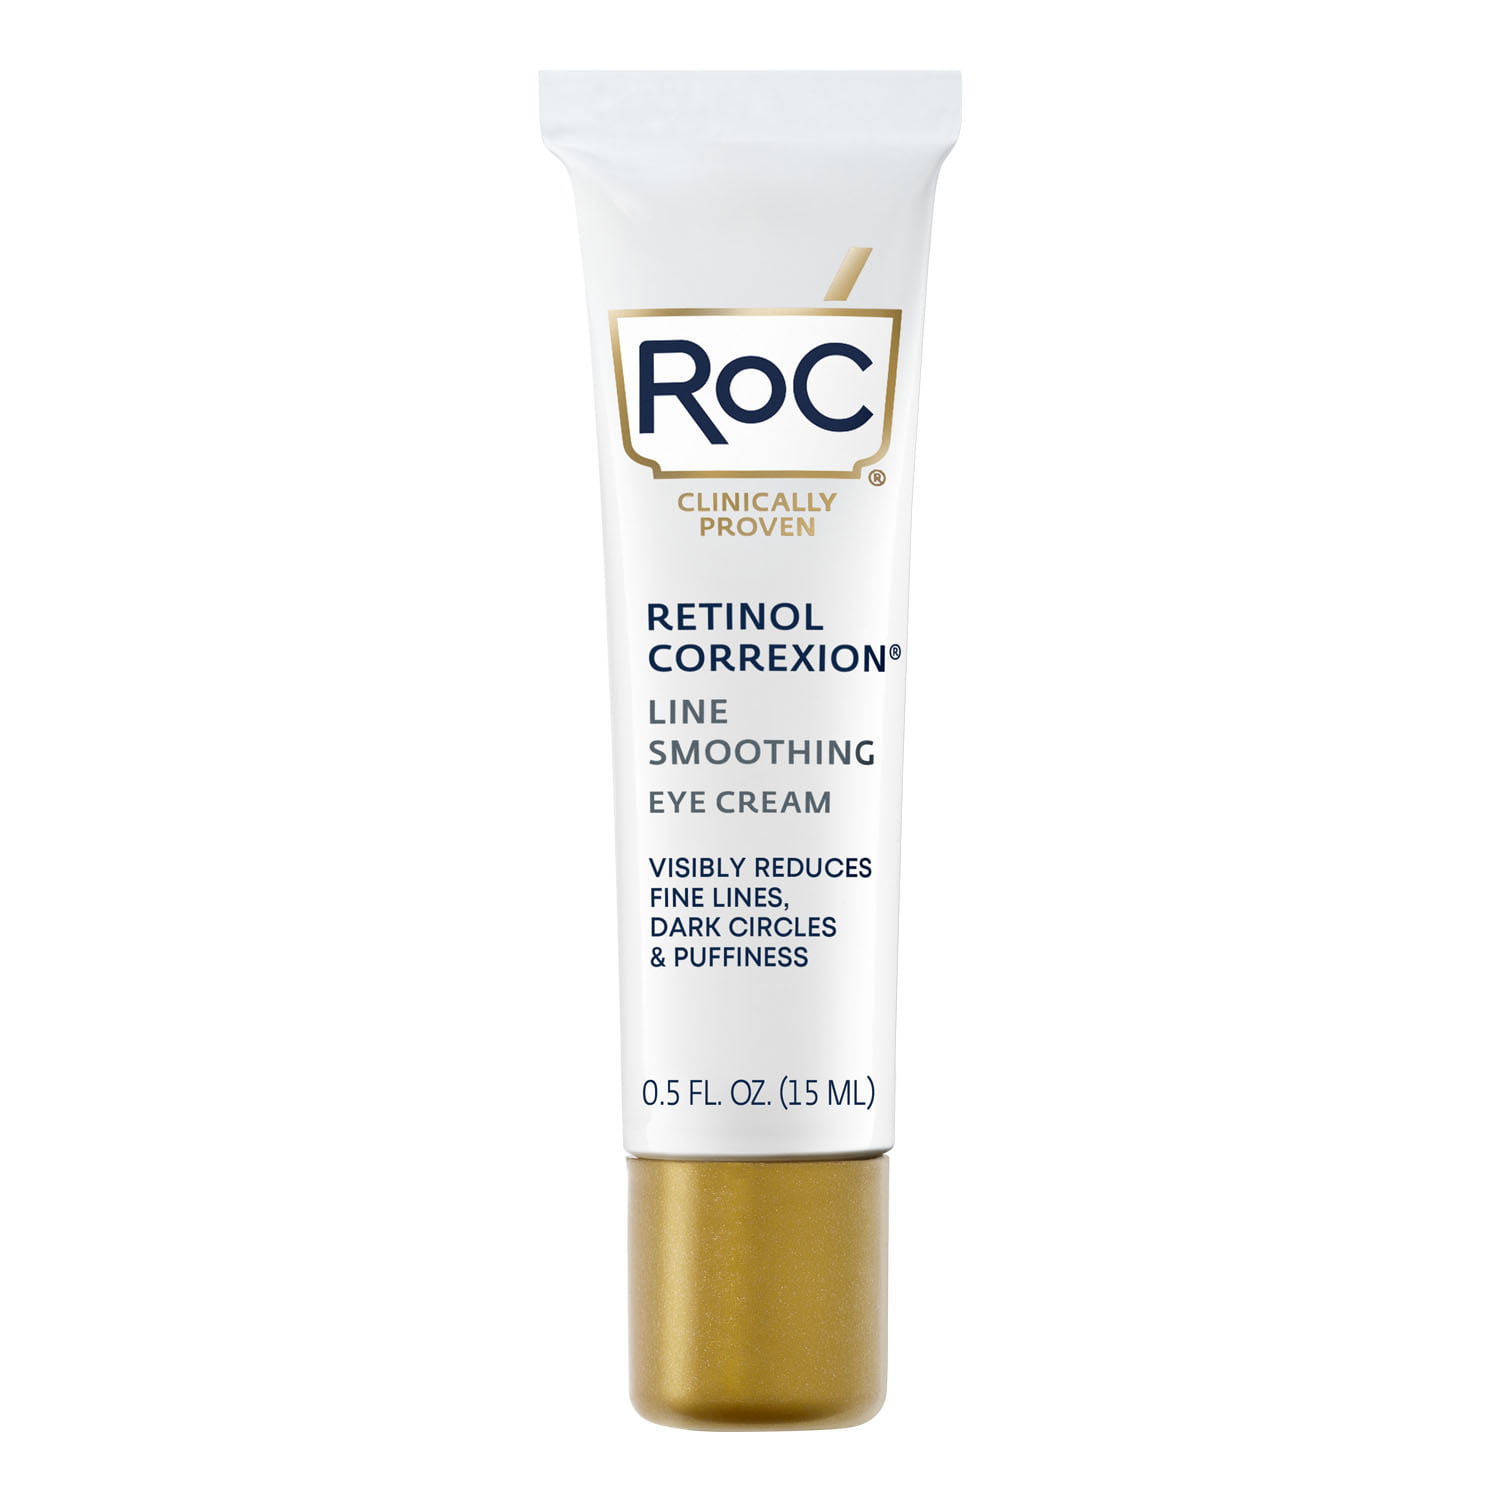 RoC Retinol Correxion Anti-Wrinkle + Firming Eye Cream for Dark Circles & Puffy Eyes, 0.5 oz - image 1 of 12